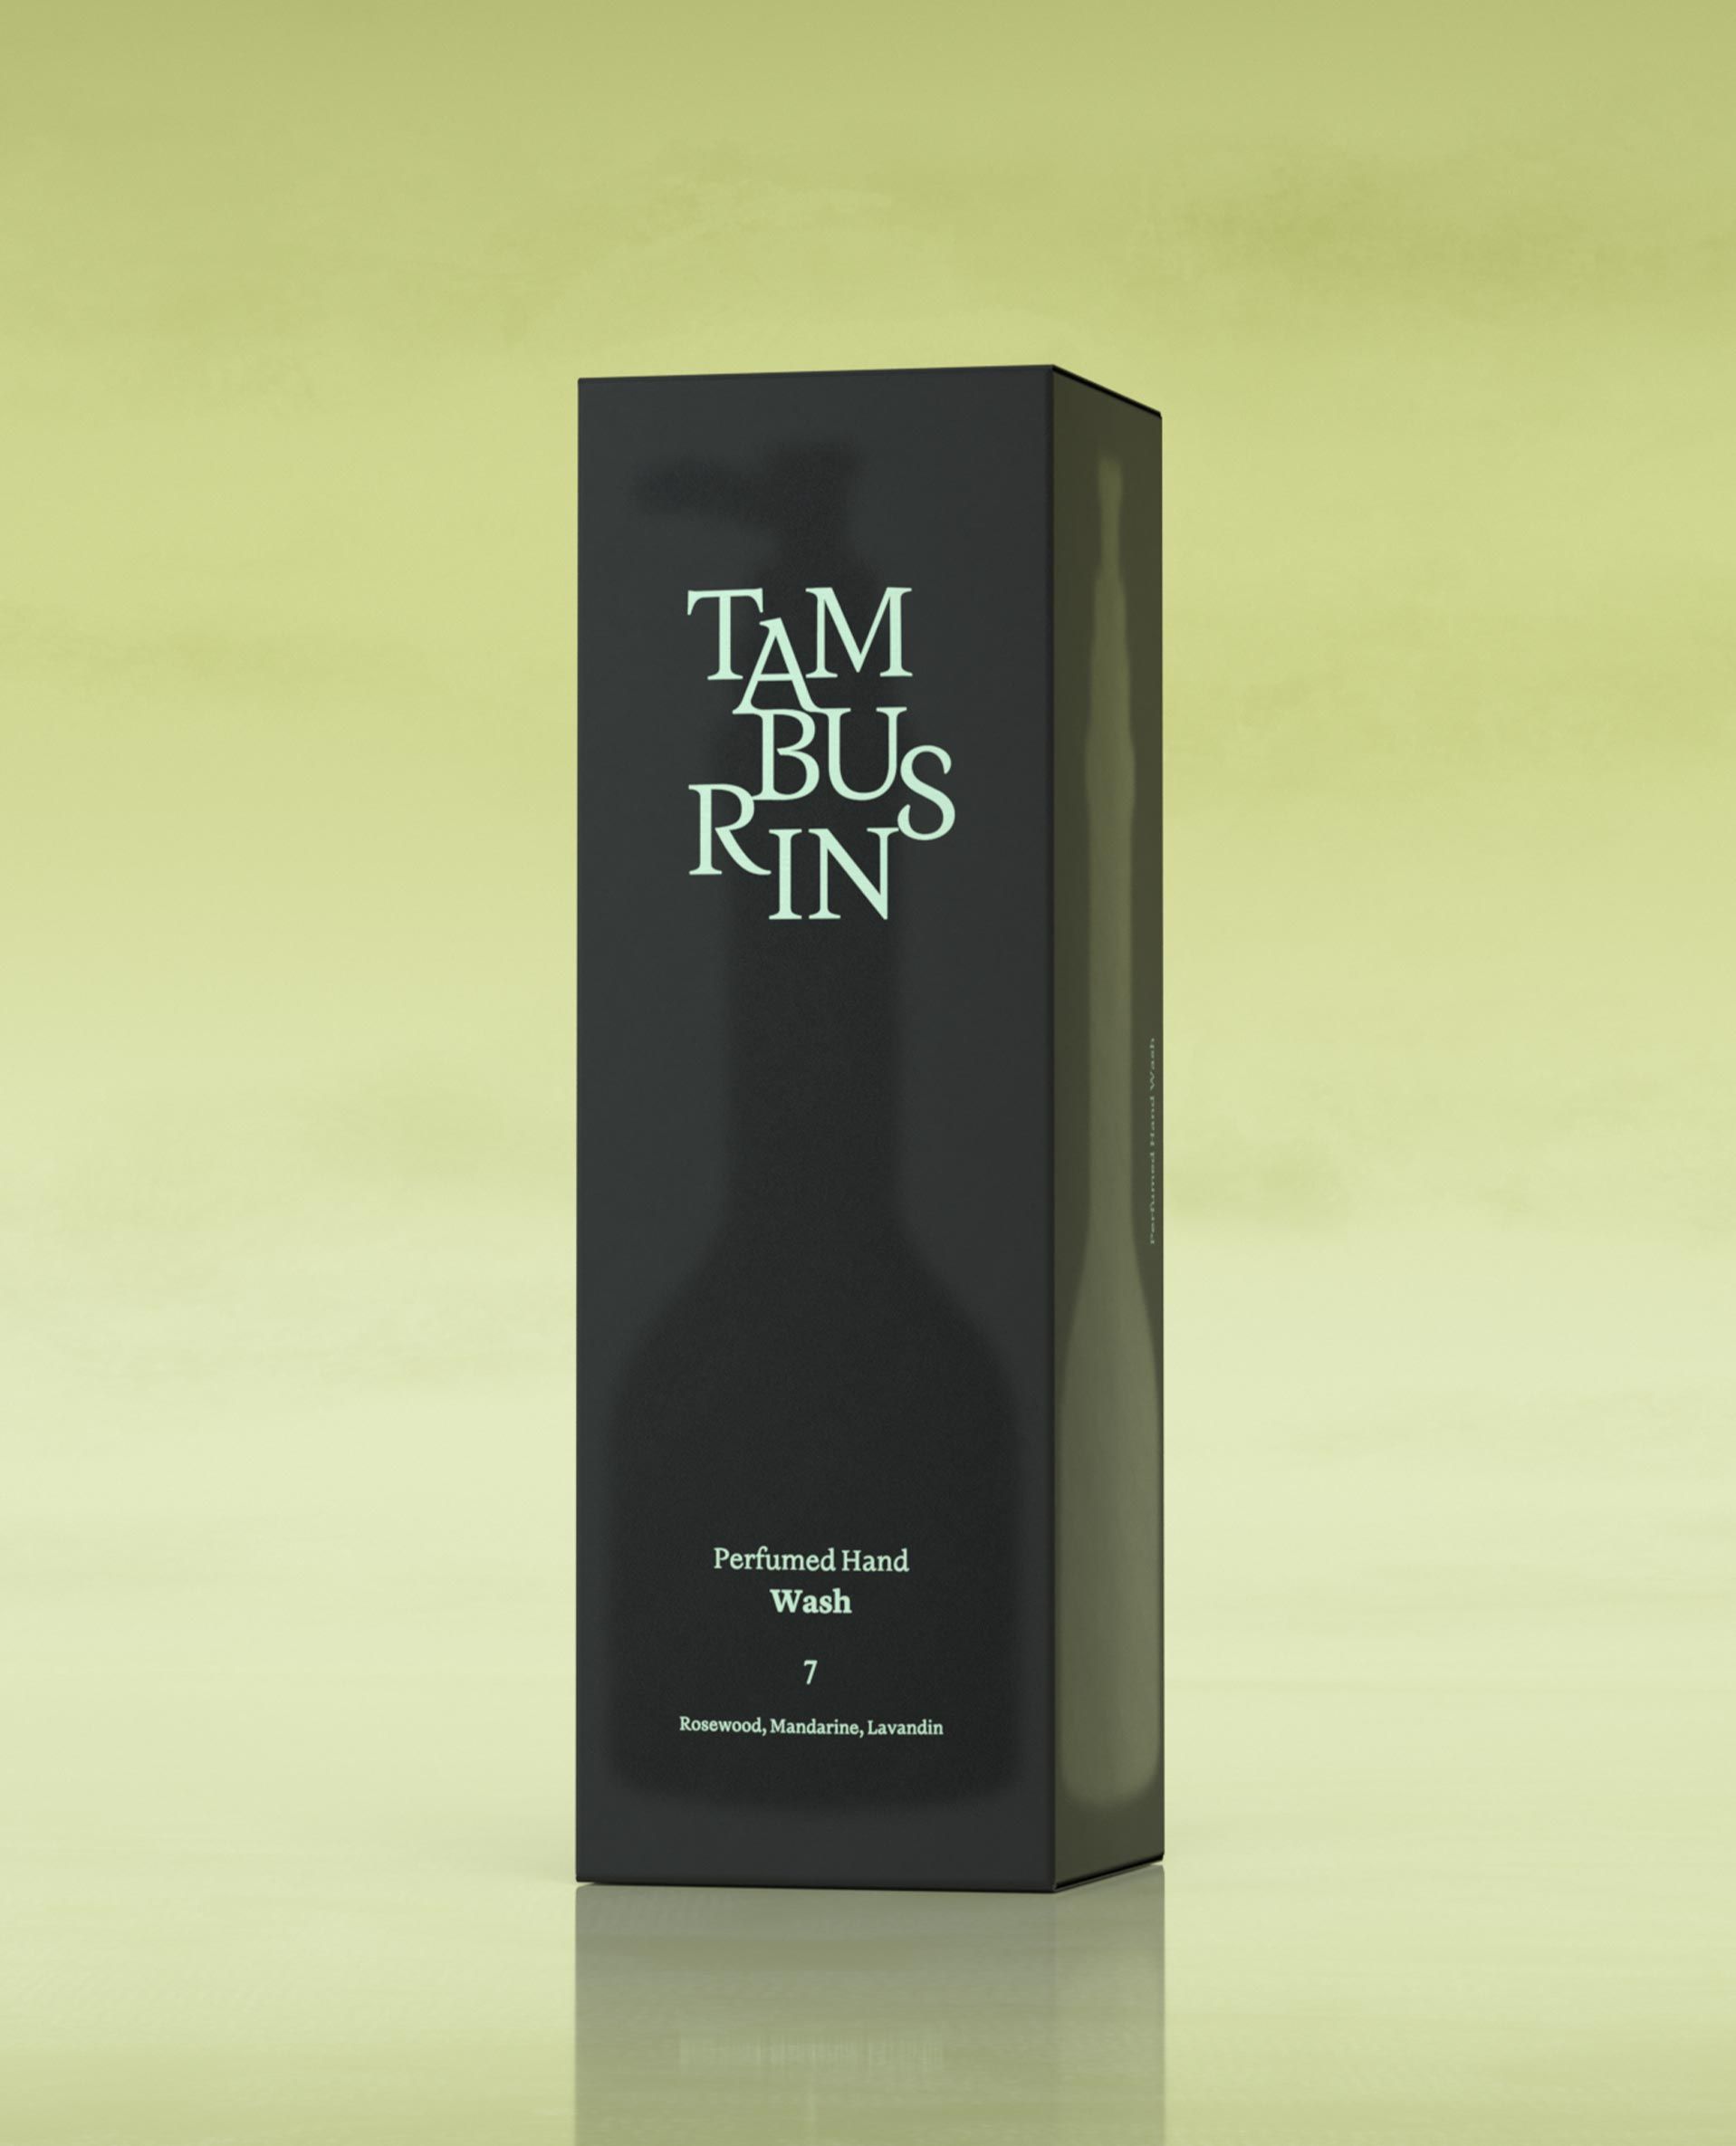 TAMBURINS Perfumed Hand & Body Wash 250ml (2 tipos)